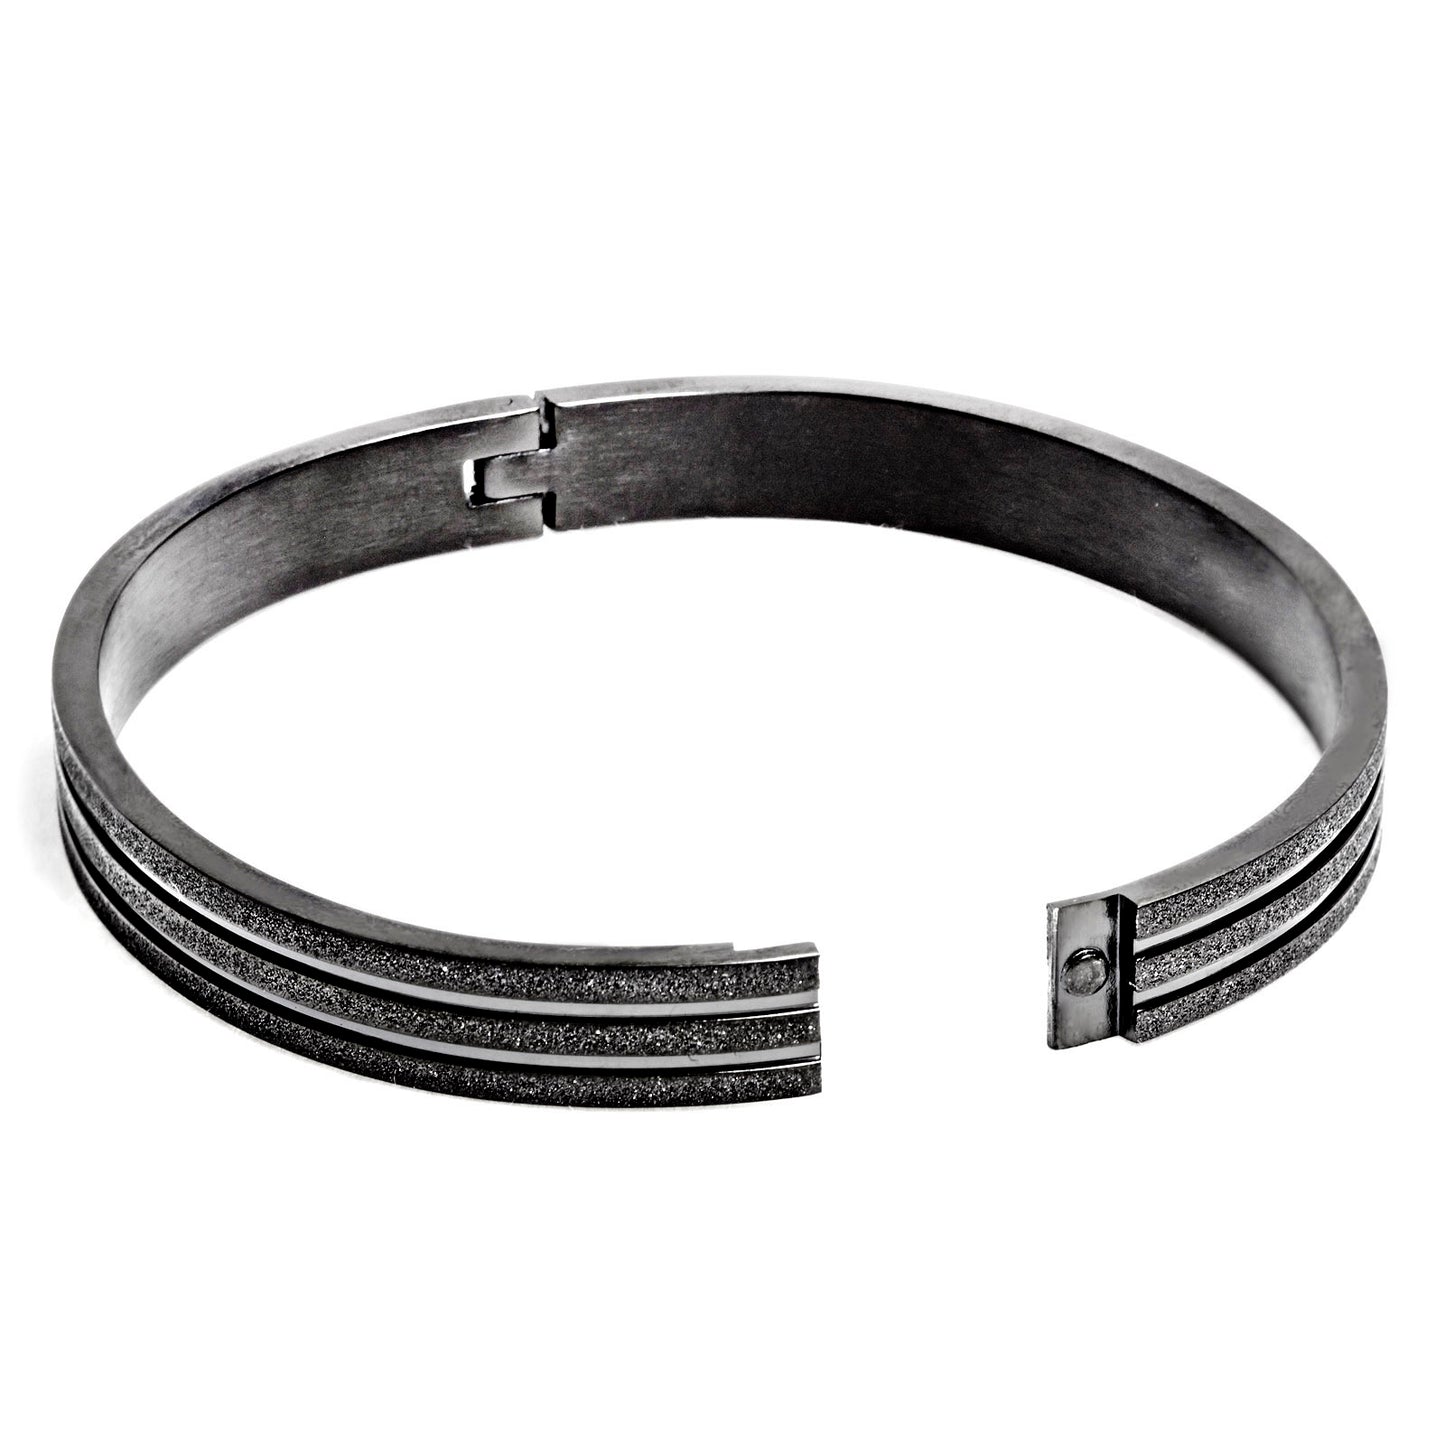 Sandblasted Bangle Black Plated Stainless Steel Bracelet (8 mm) - 8"